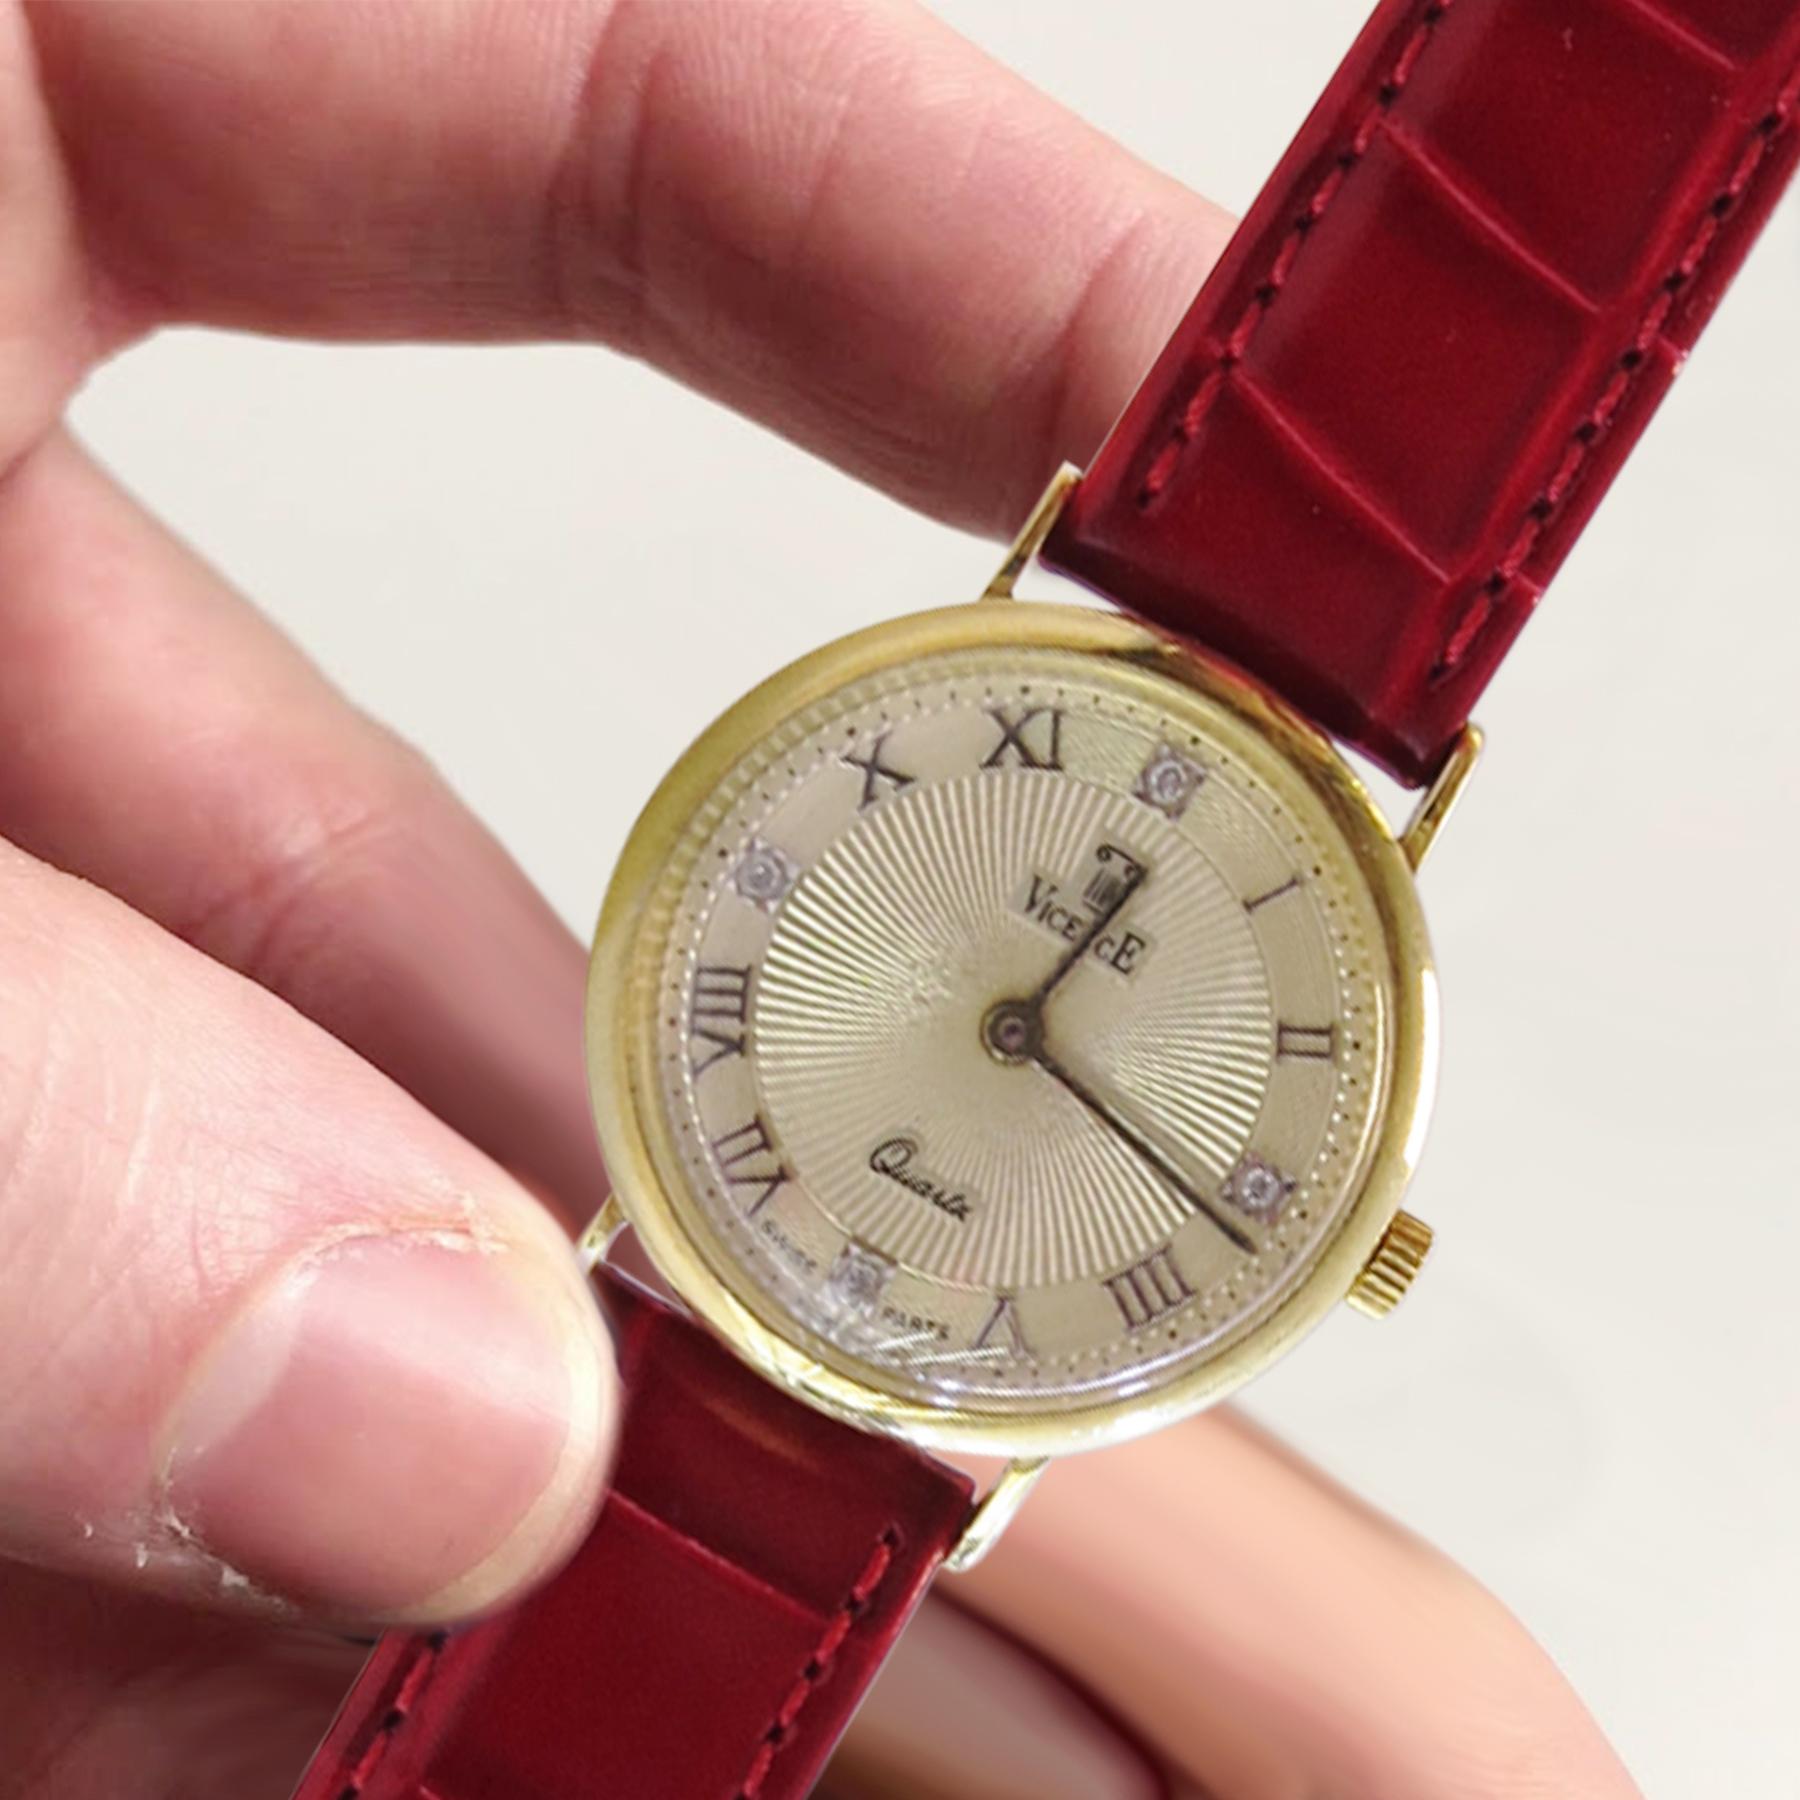 vicence 14k gold milor watch